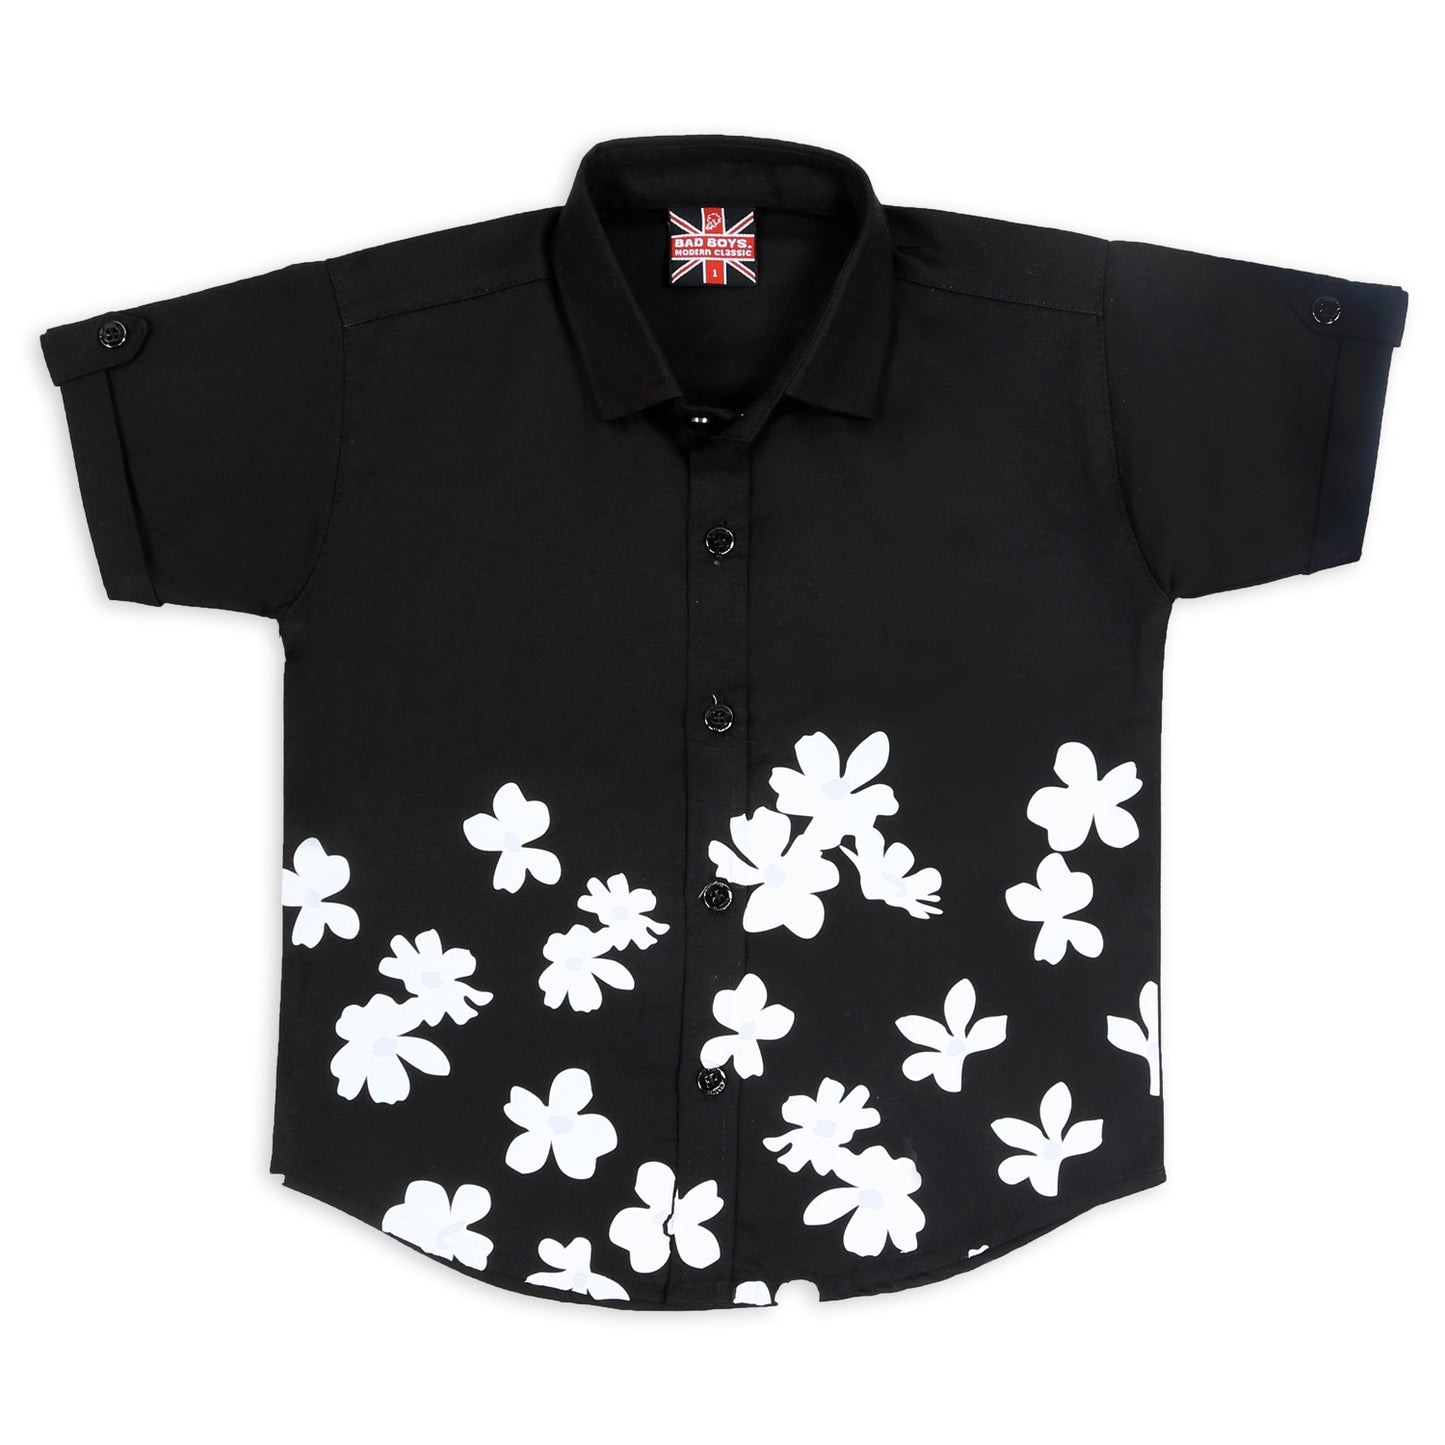 Blossom in Style: Flower Power Shirt + Jeans Set for Boys!